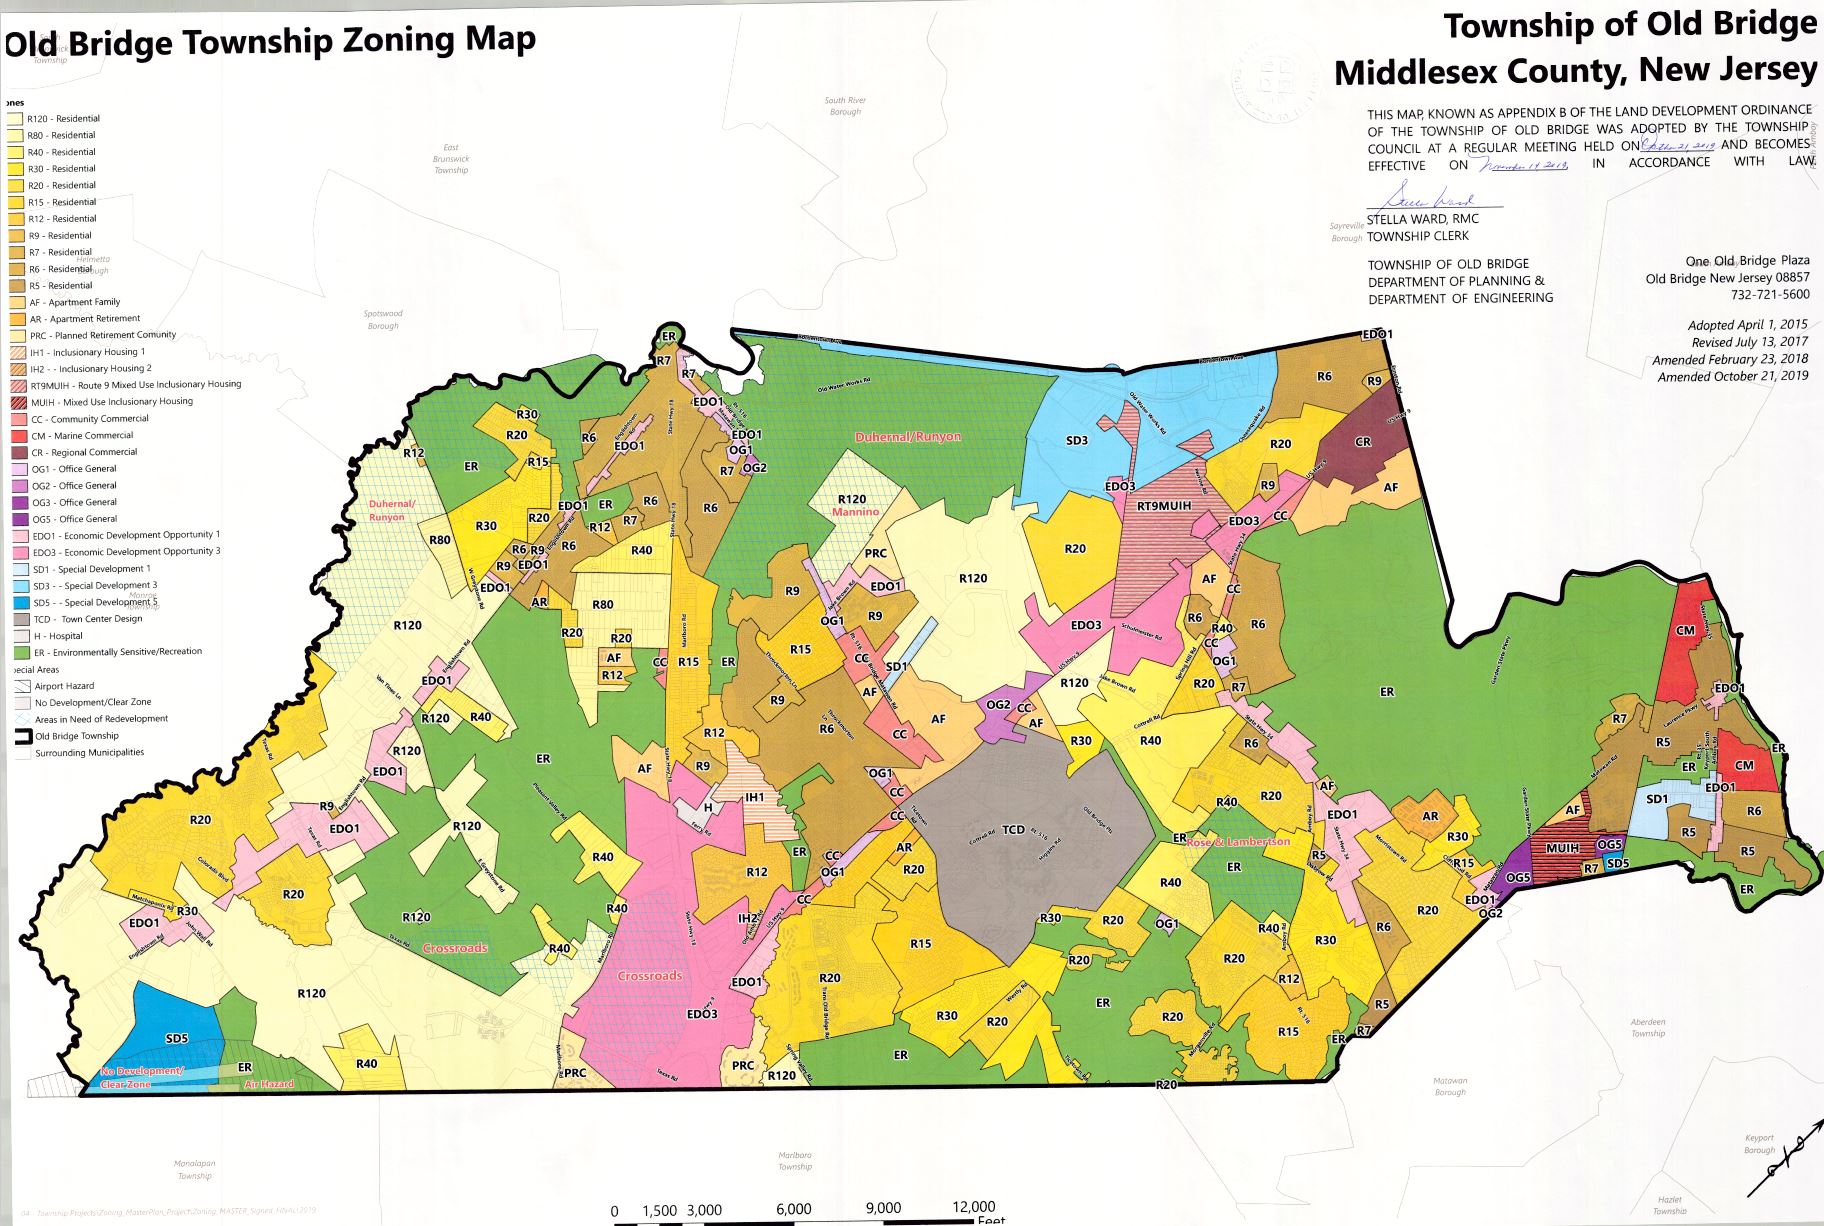 Zoning Map